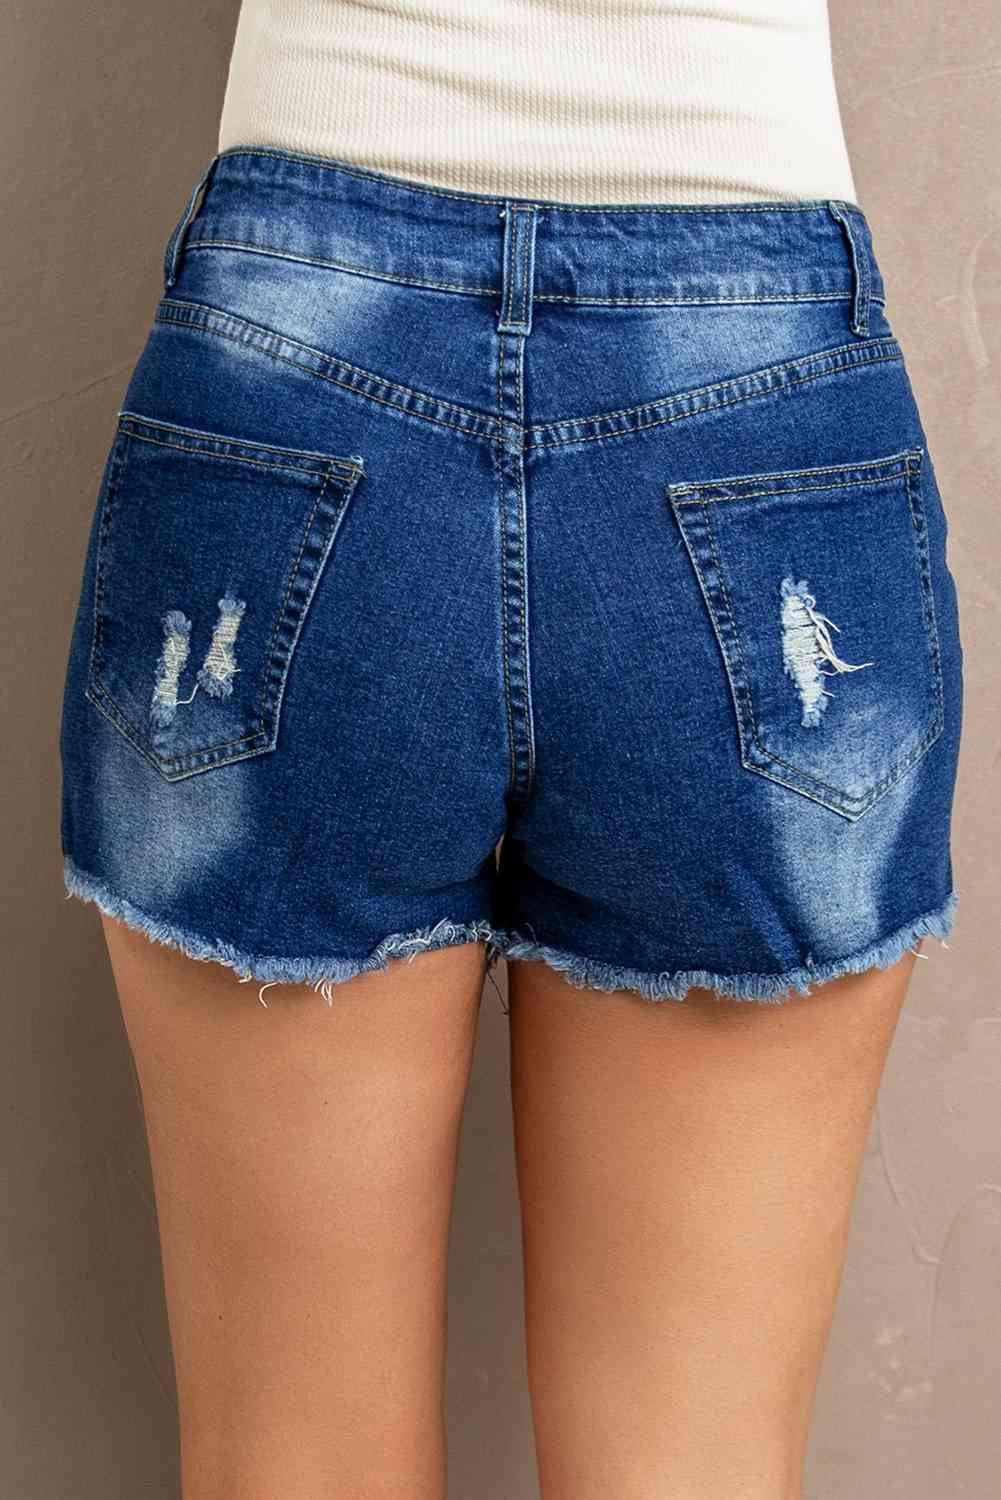 Delicate Distressed Lace Denim Shorts - MXSTUDIO.COM